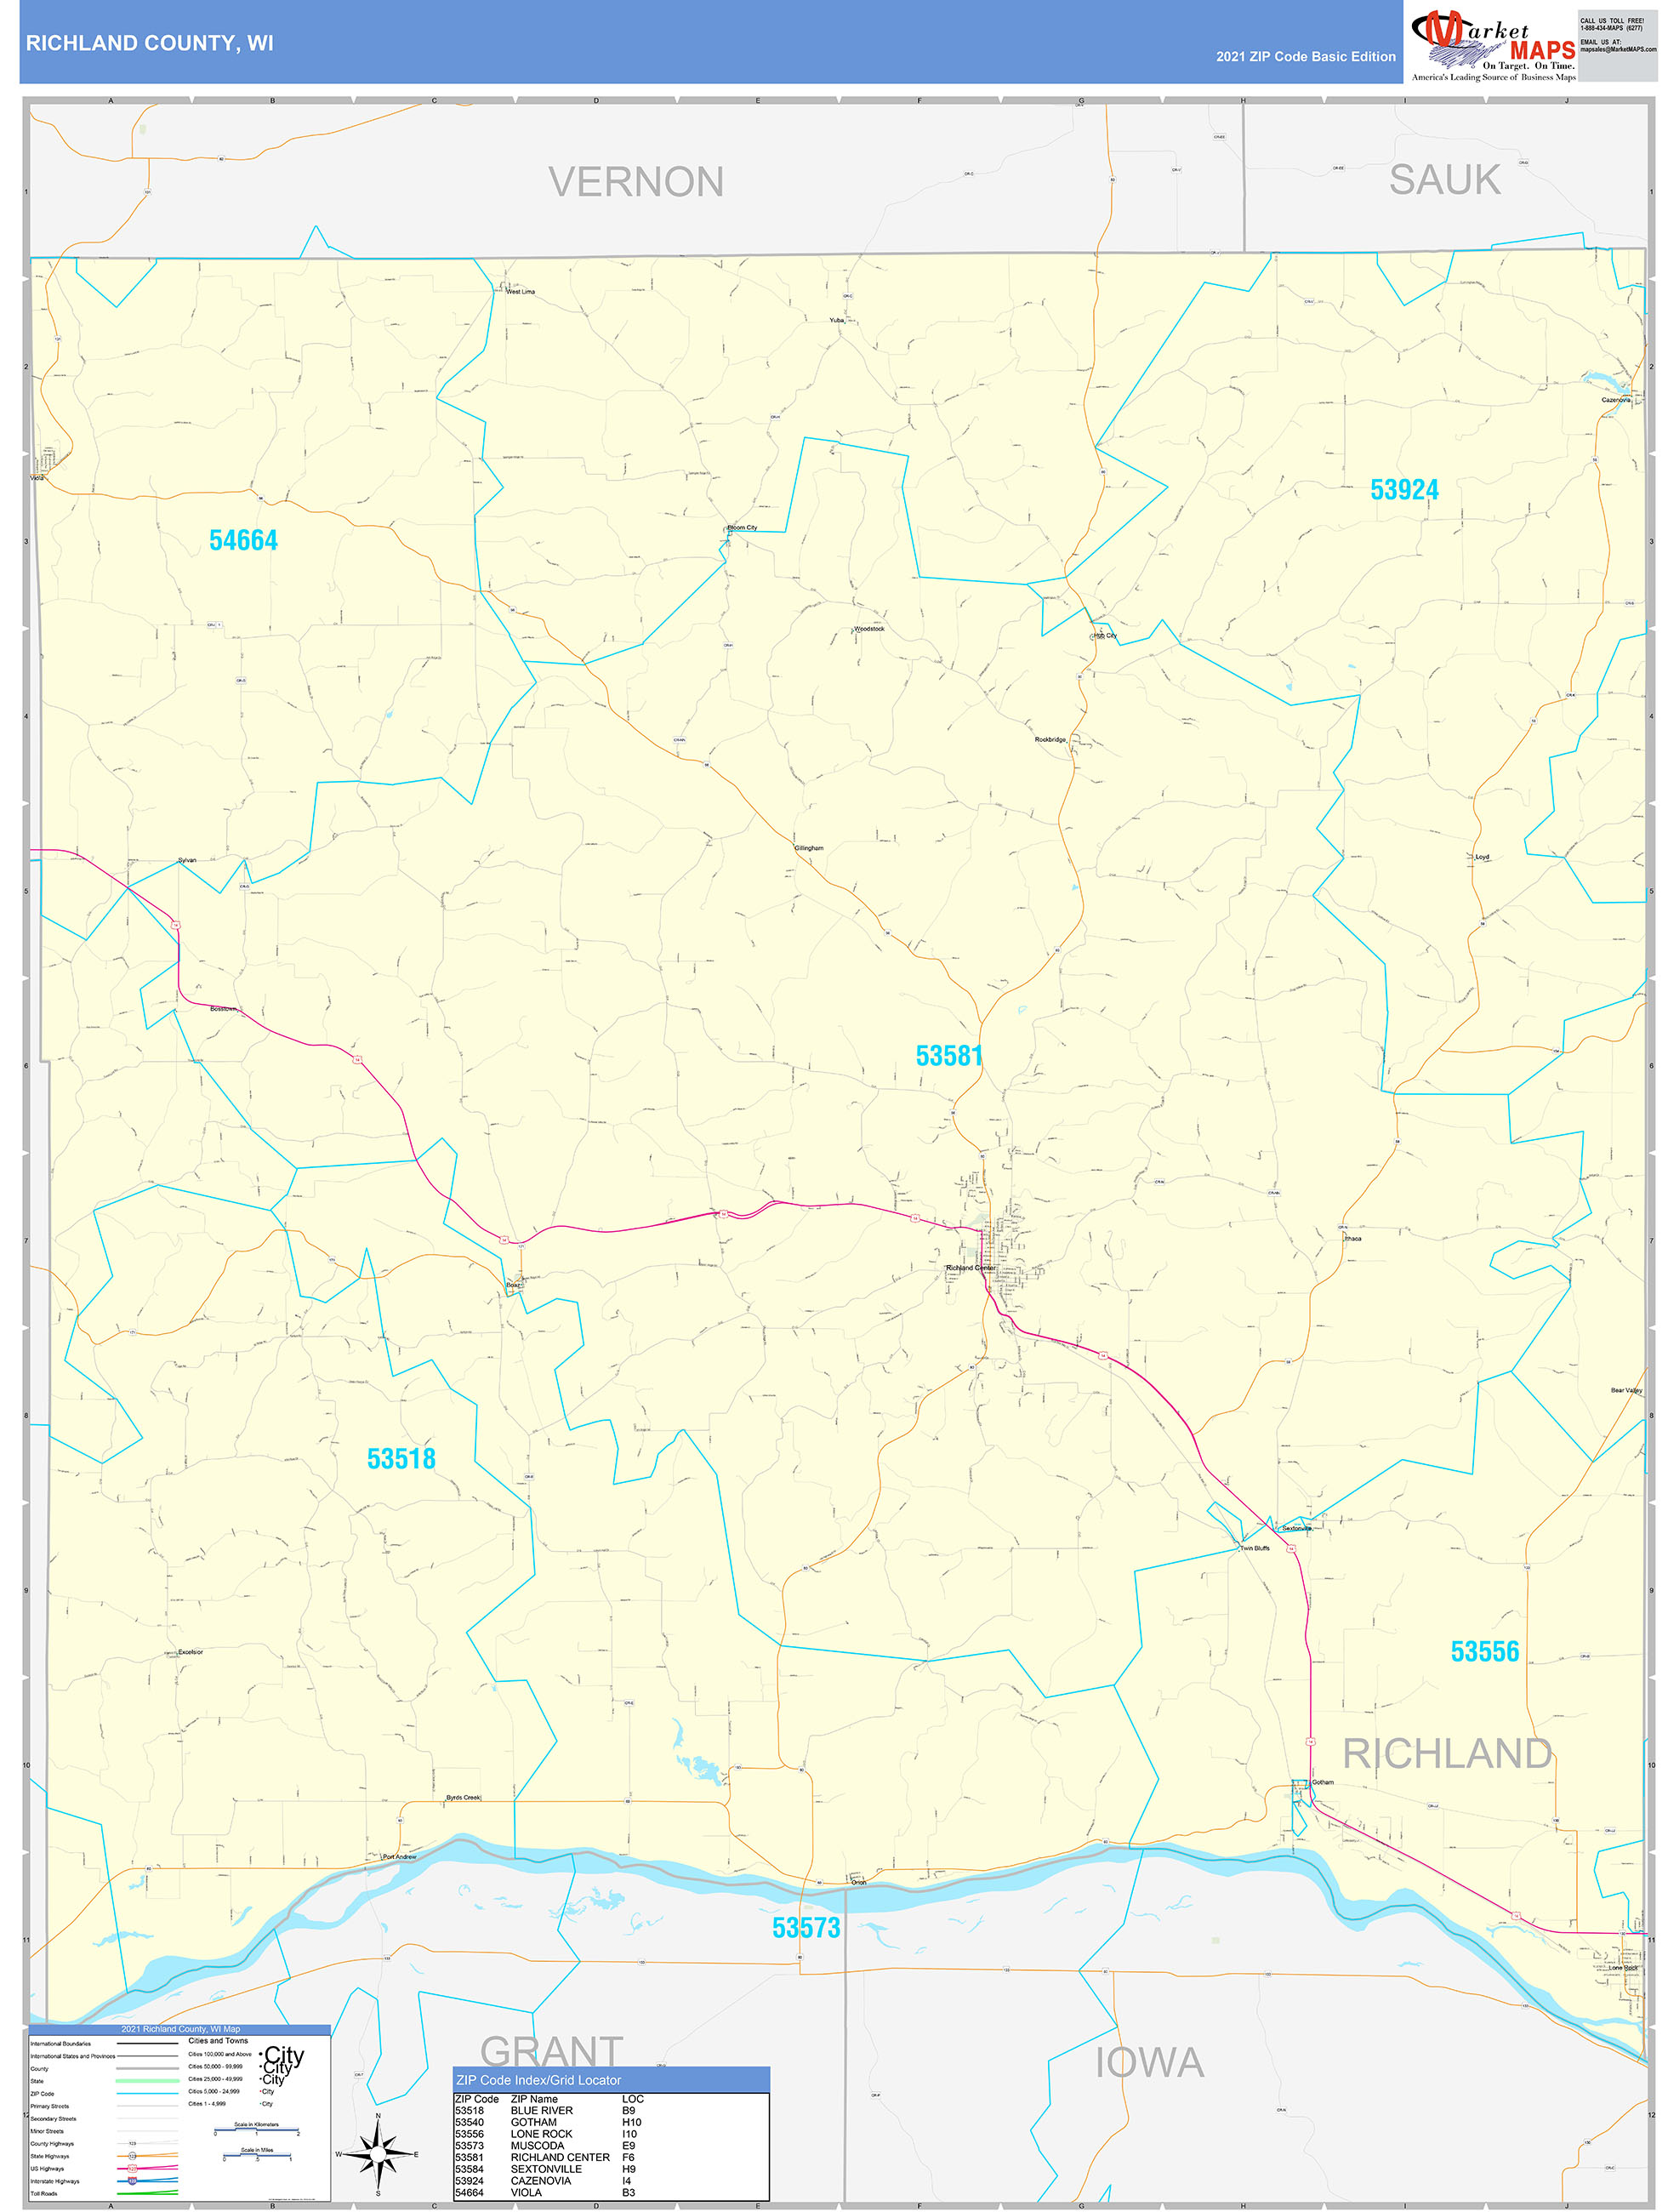 richland-county-wi-zip-code-wall-map-basic-style-by-marketmaps-mapsales